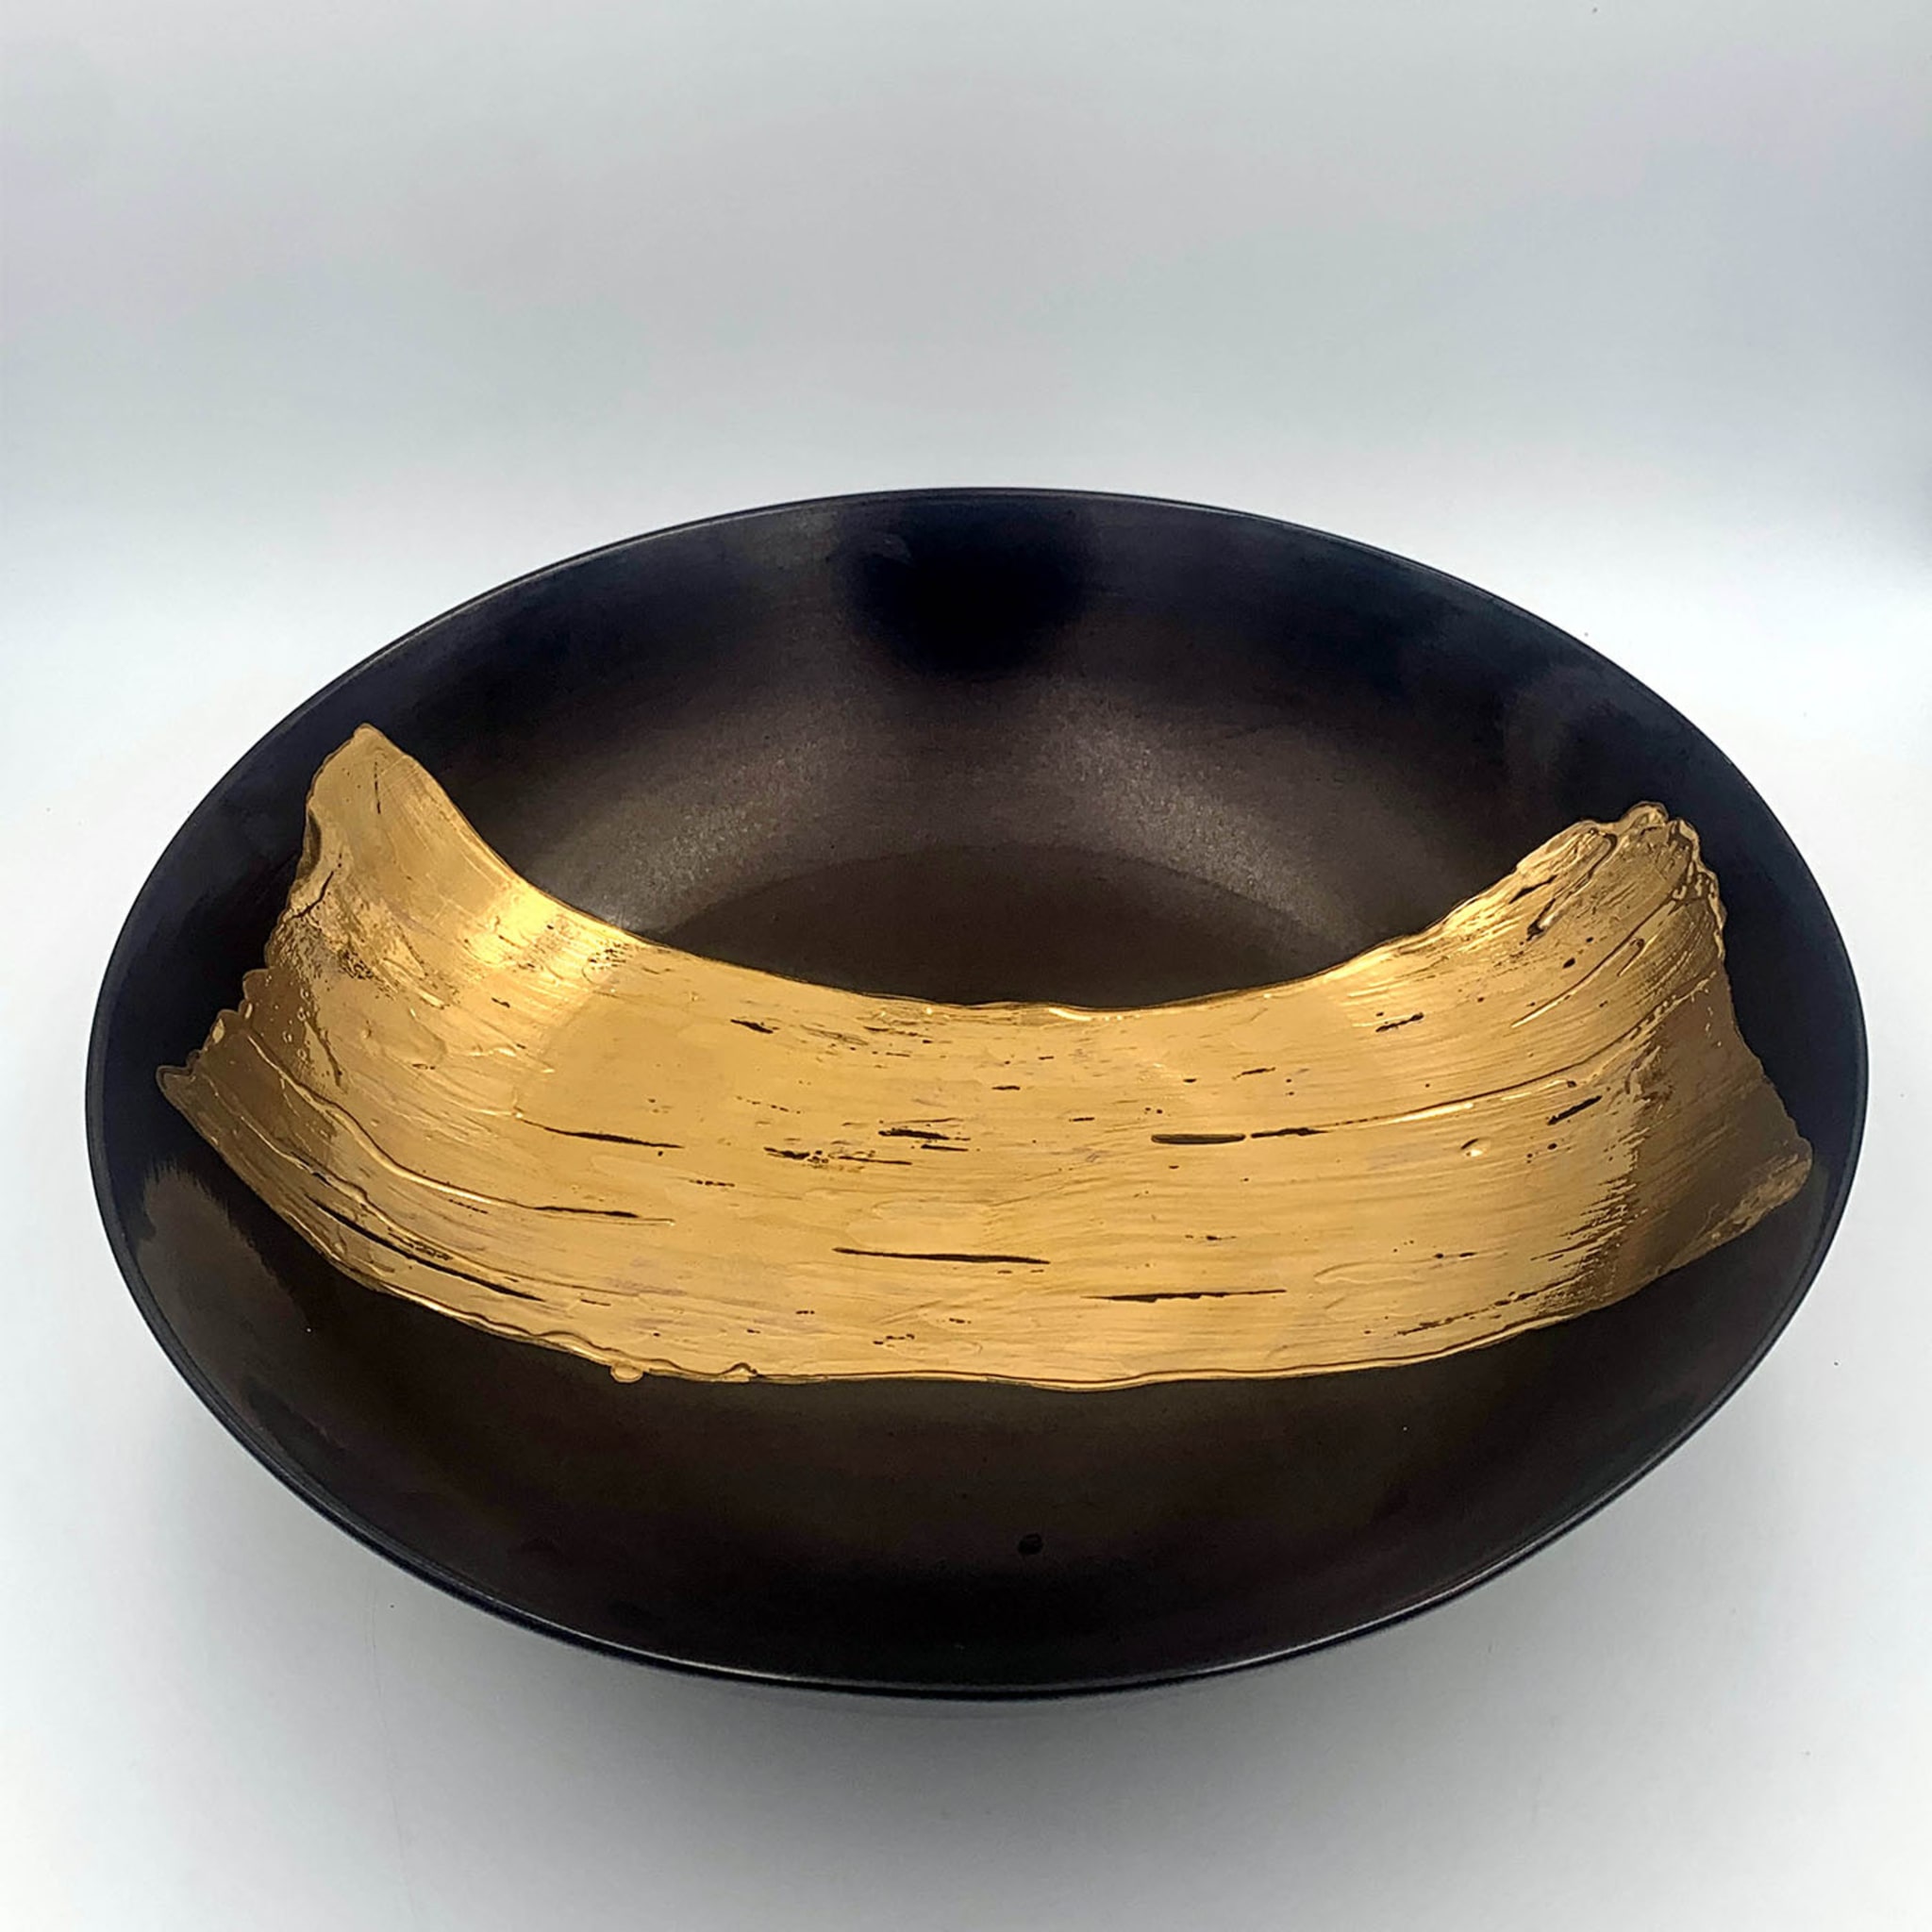 Pennelata Gold and Black Ceramic Centerpiece - Alternative view 3